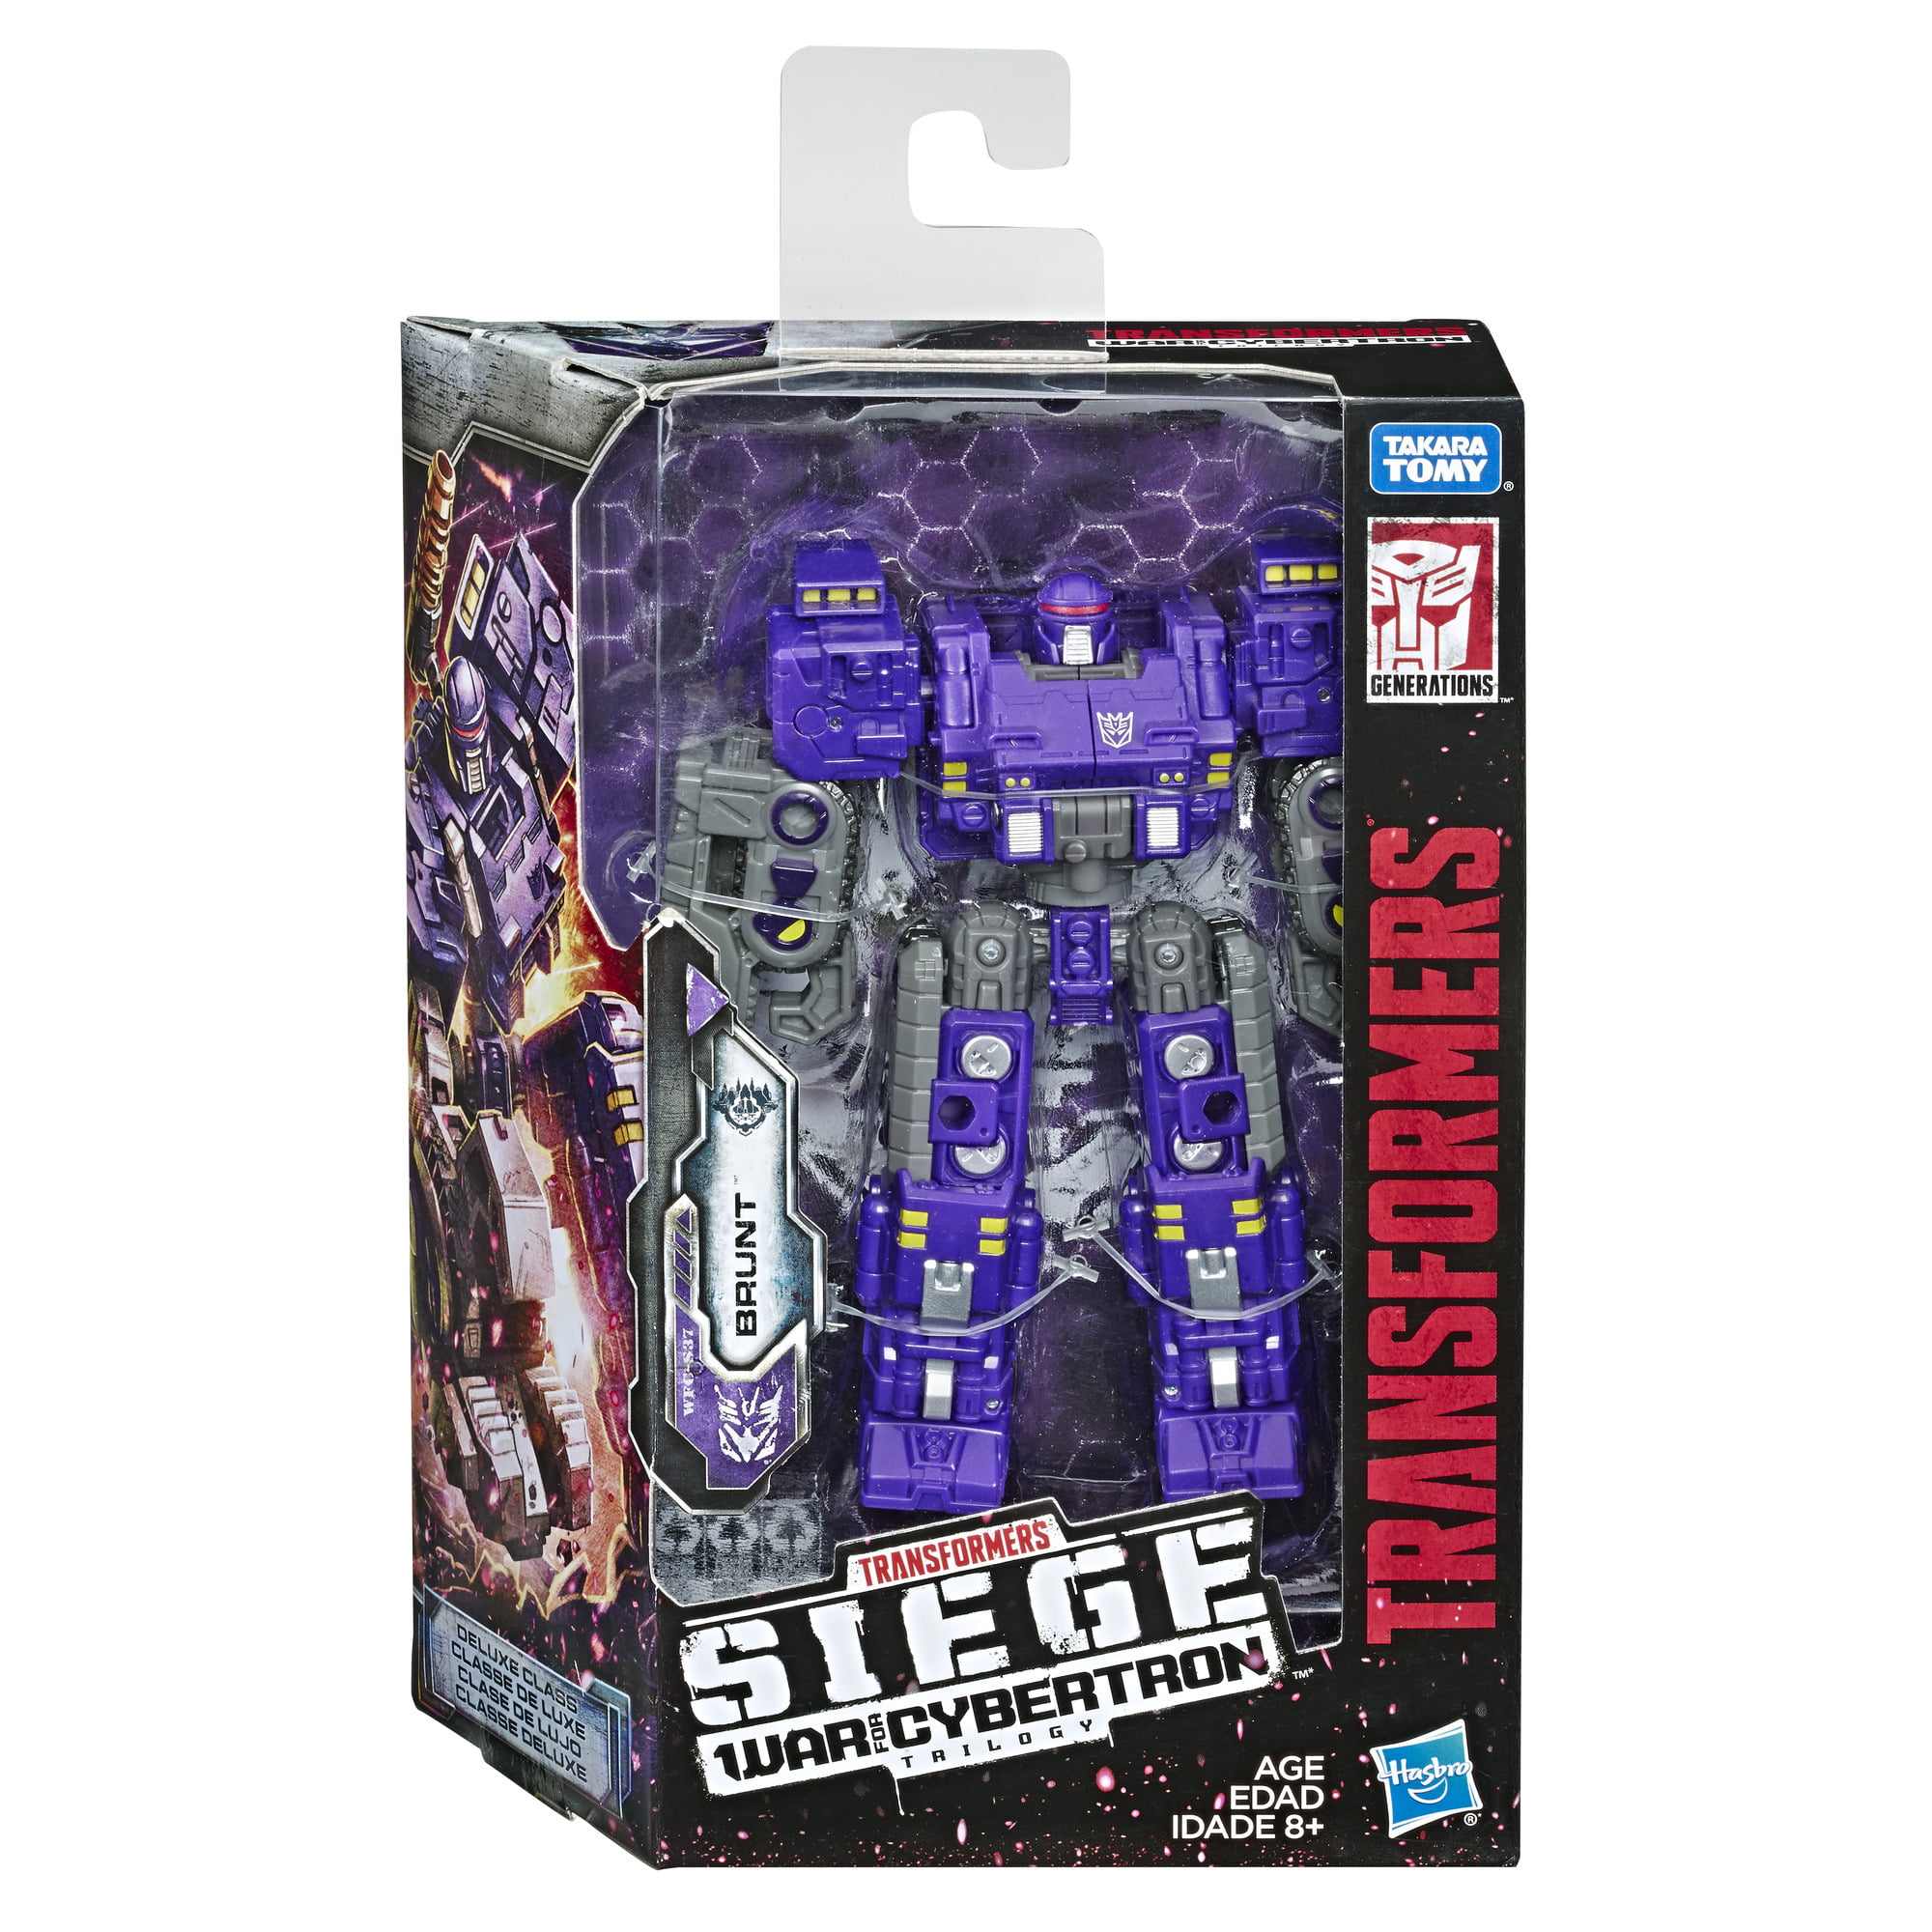 2018 MIB Hasbro Transformers Siege War for Cybertron Brunt for sale online 